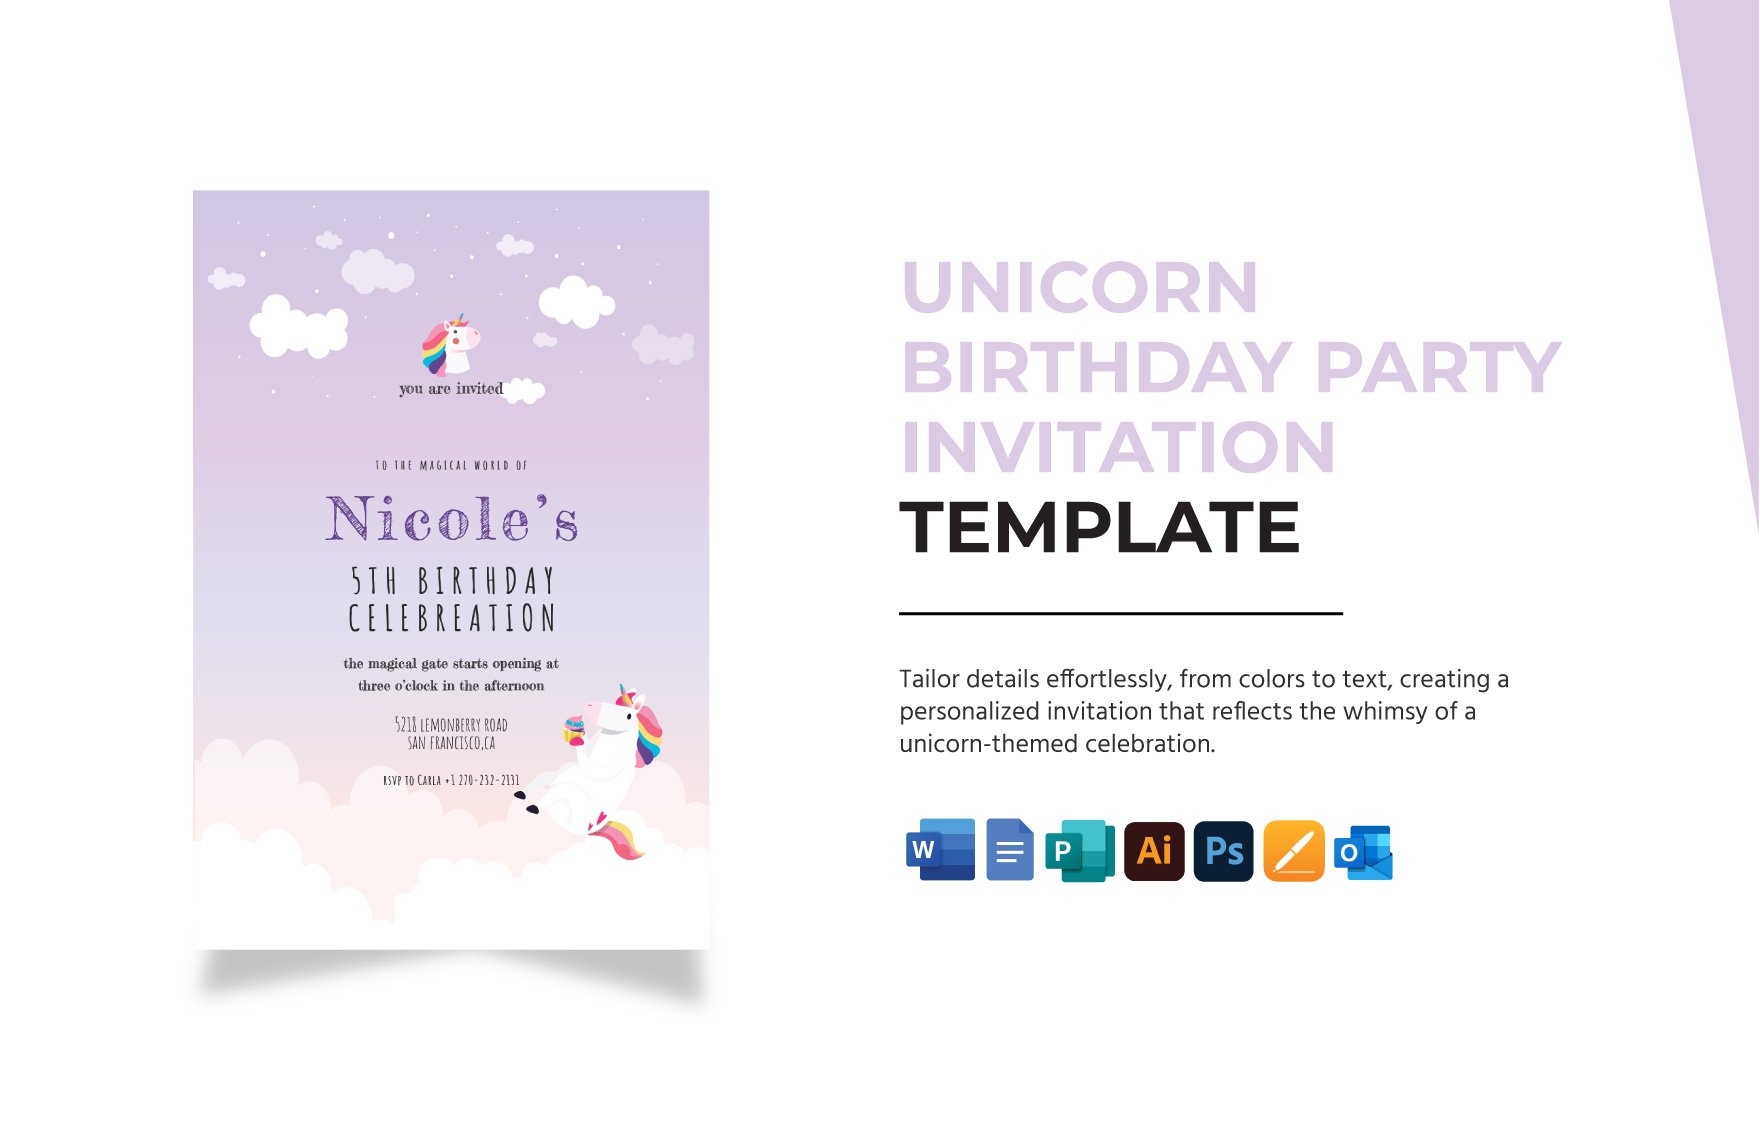 Unicorn Birthday Party Invitation Template